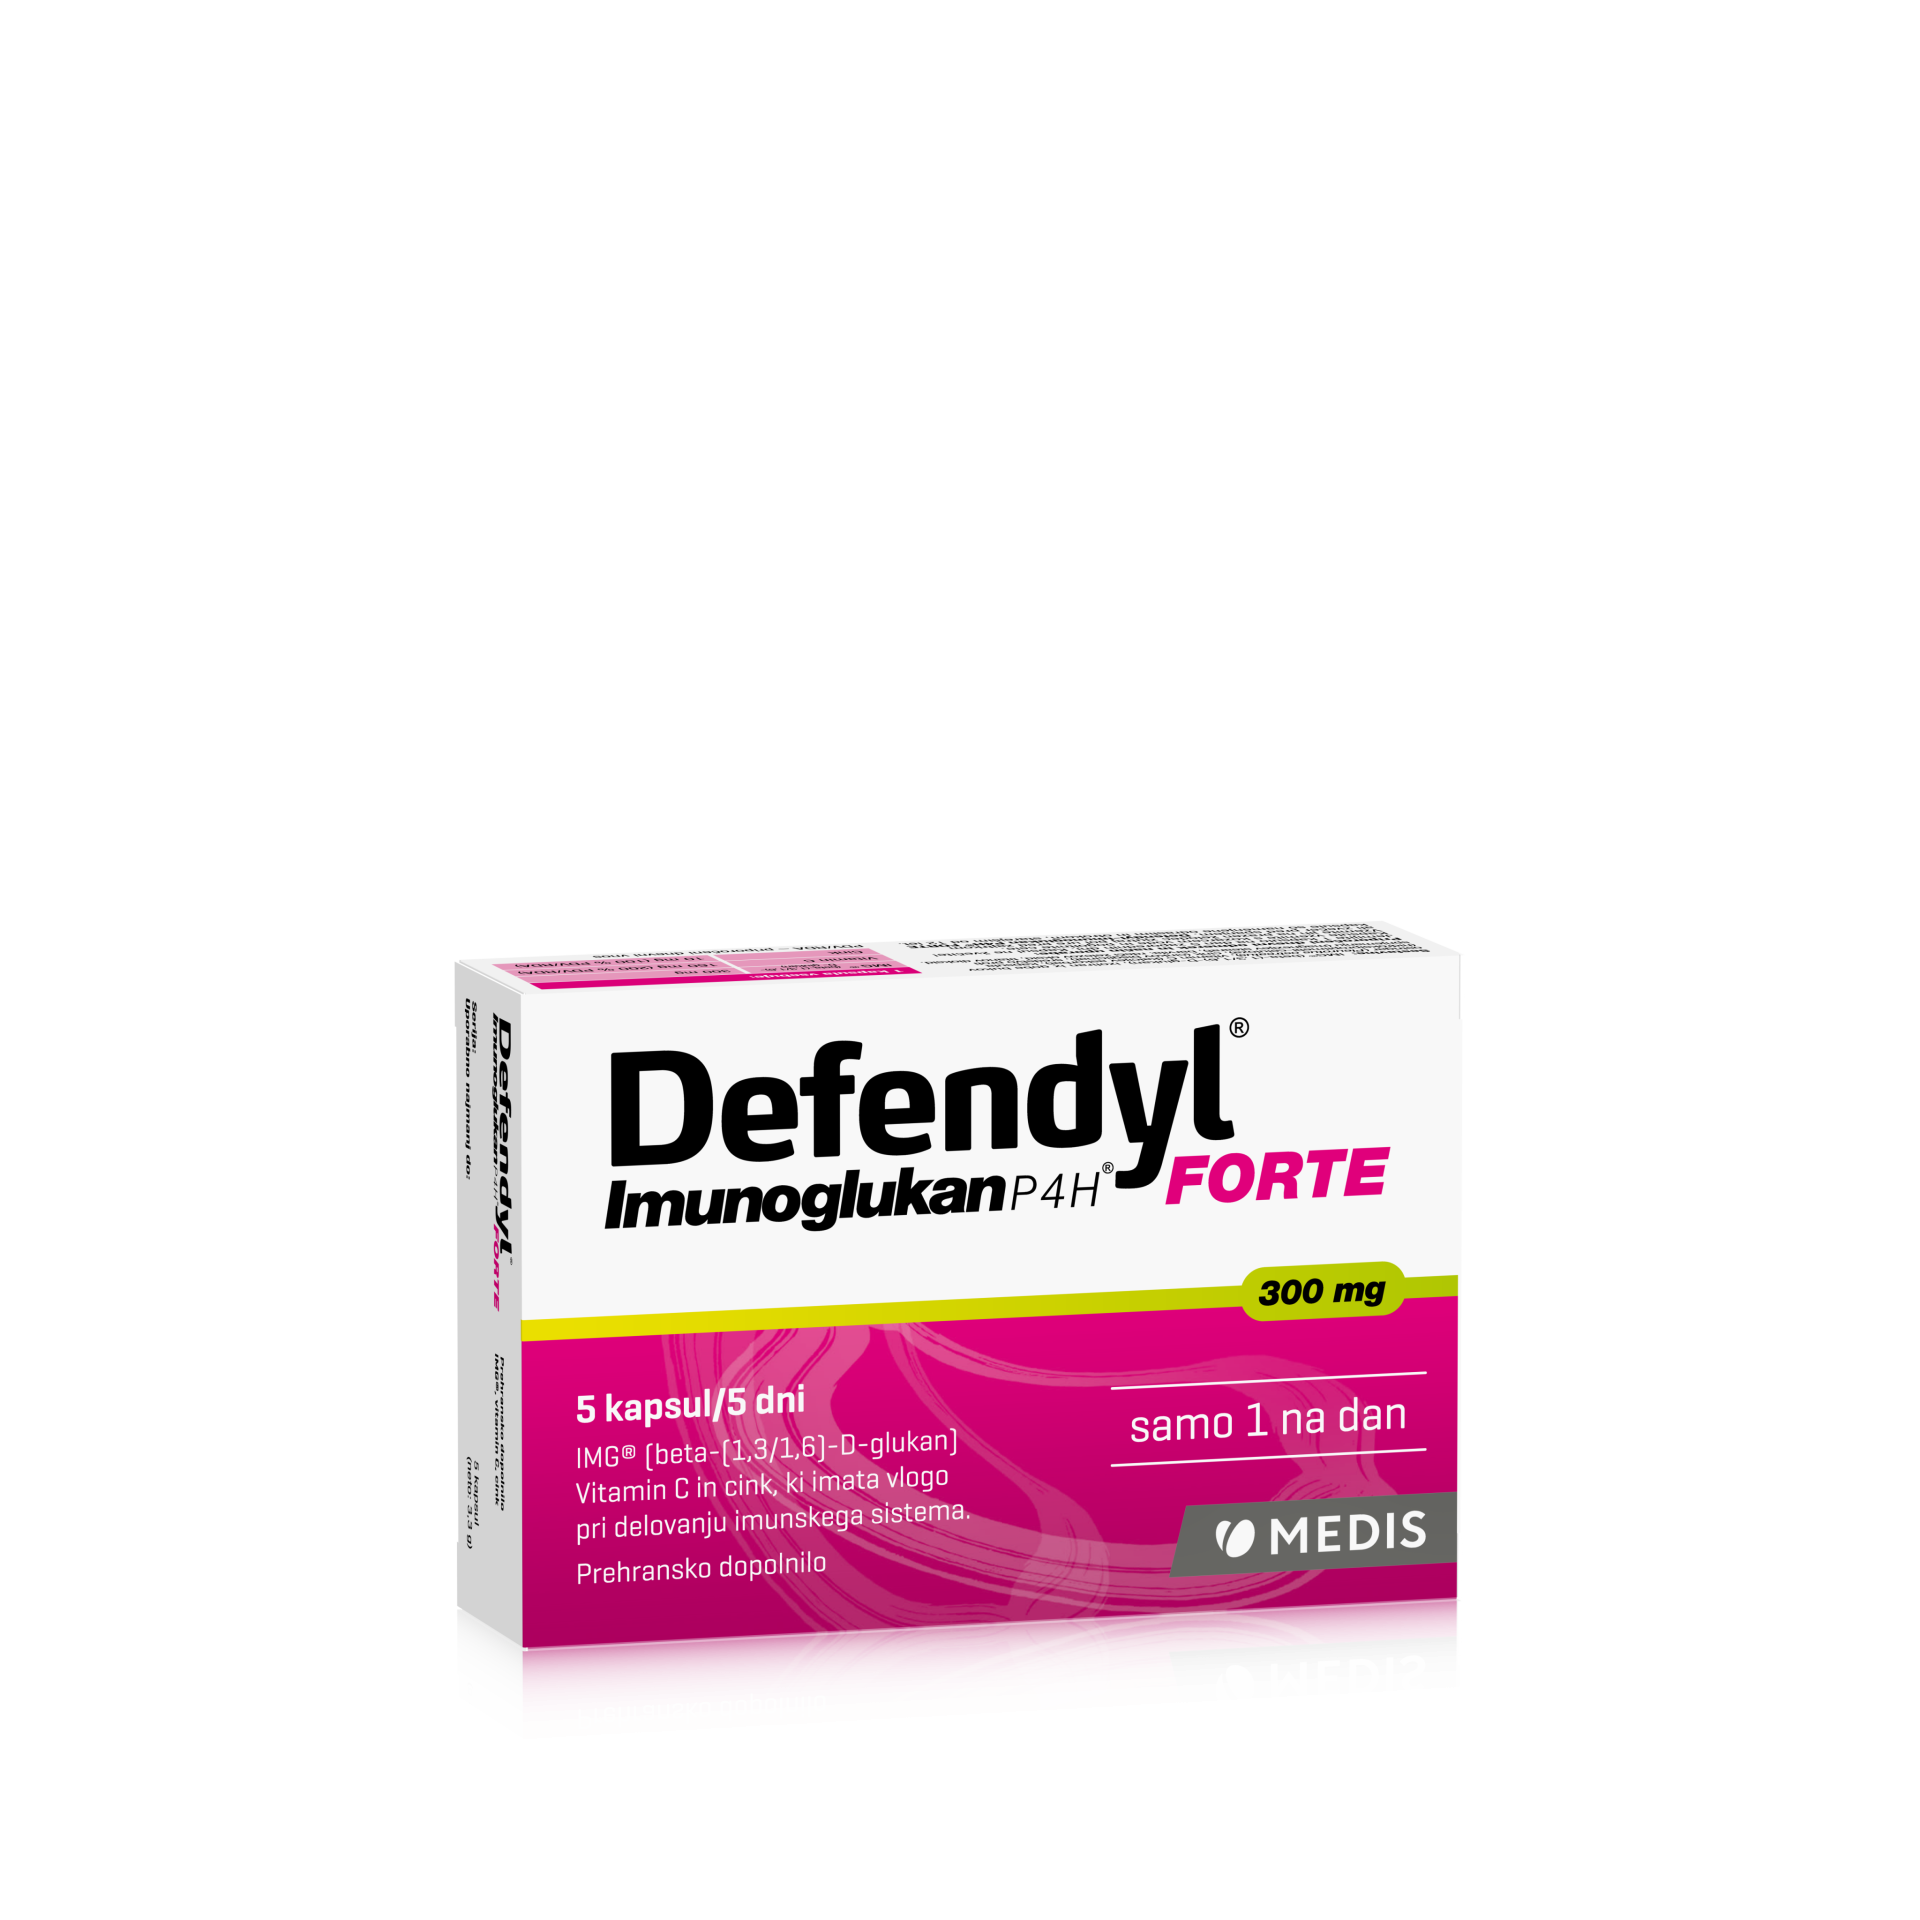 Defendyl-Imunoglukan P4H FORTE kapsule, 5 kapsul